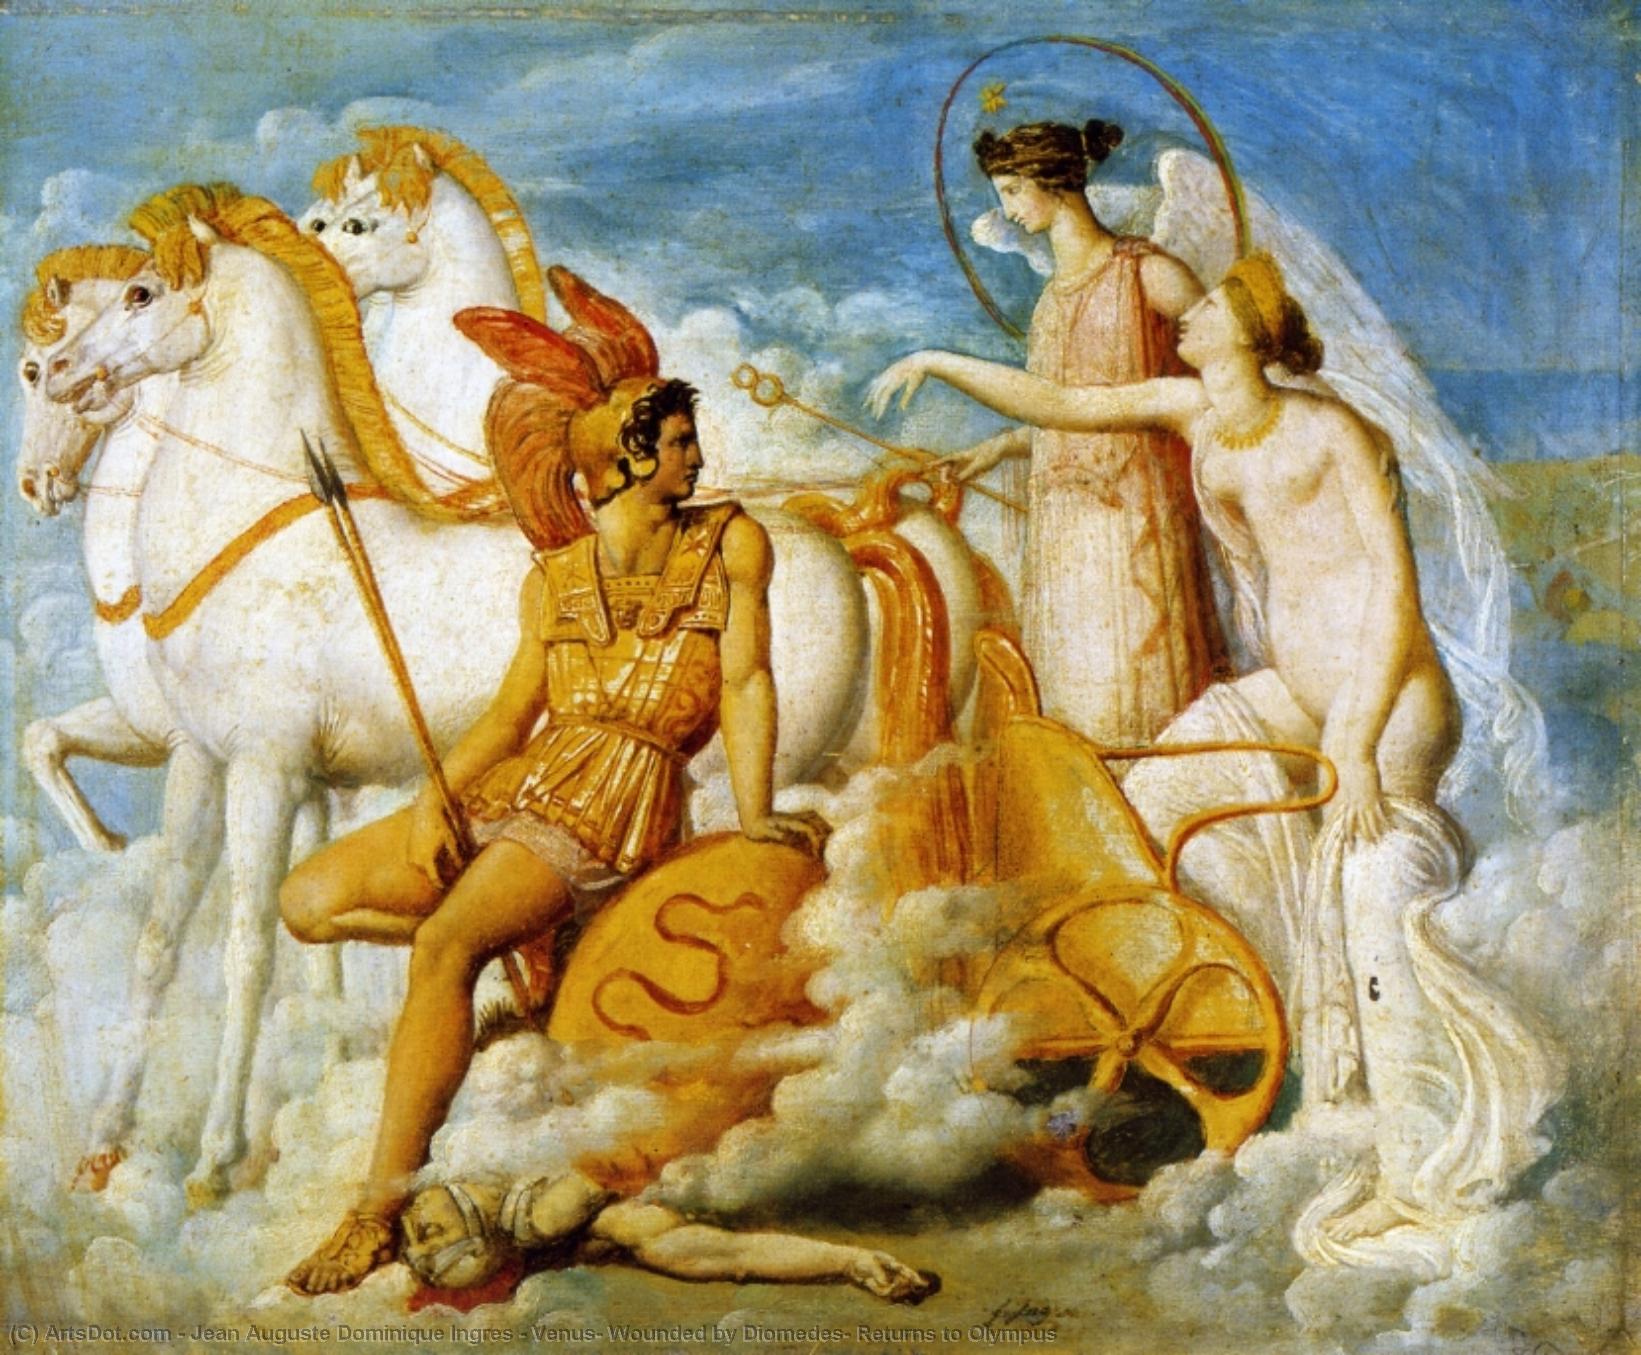 WikiOO.org - Енциклопедия за изящни изкуства - Живопис, Произведения на изкуството Jean Auguste Dominique Ingres - Venus, Wounded by Diomedes, Returns to Olympus